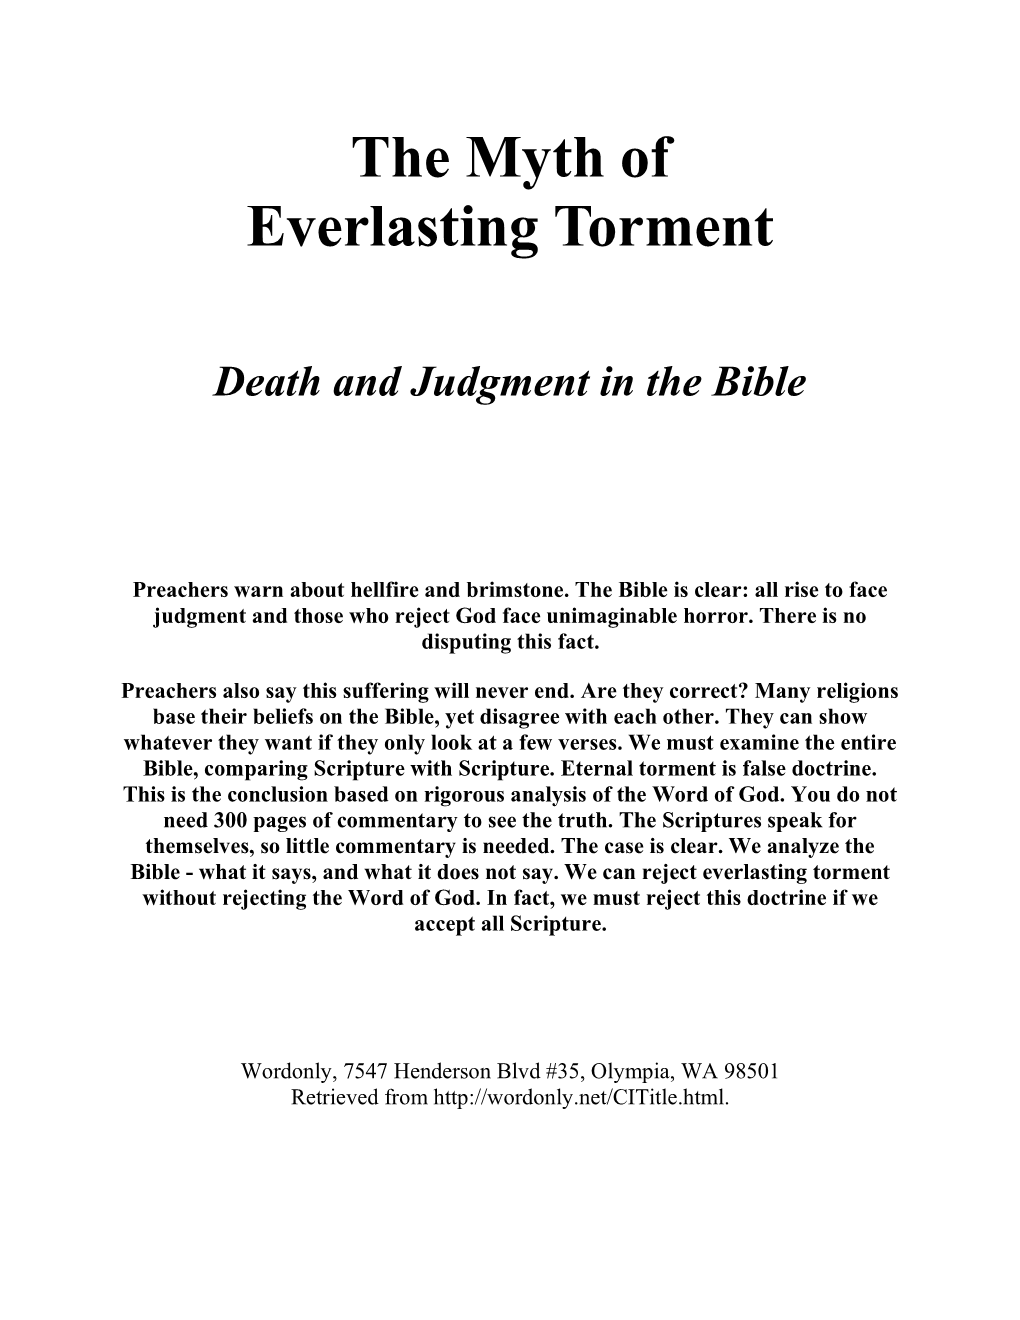 The Myth of Everlasting Torment